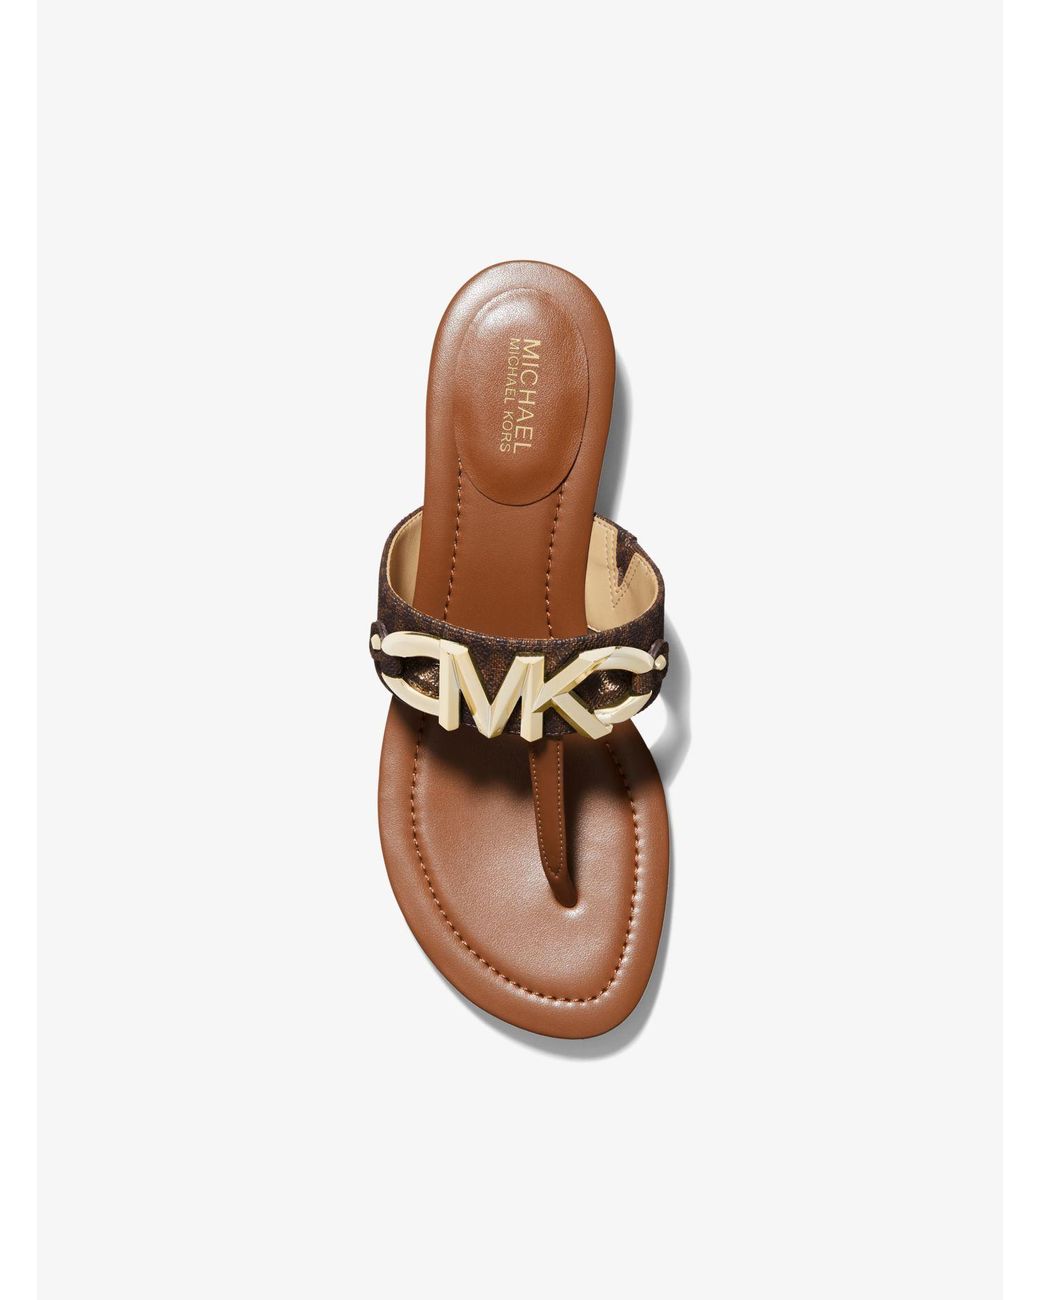 Michael Kors Canvas Izzy Embellished Logo Sandal in Brown | Lyst